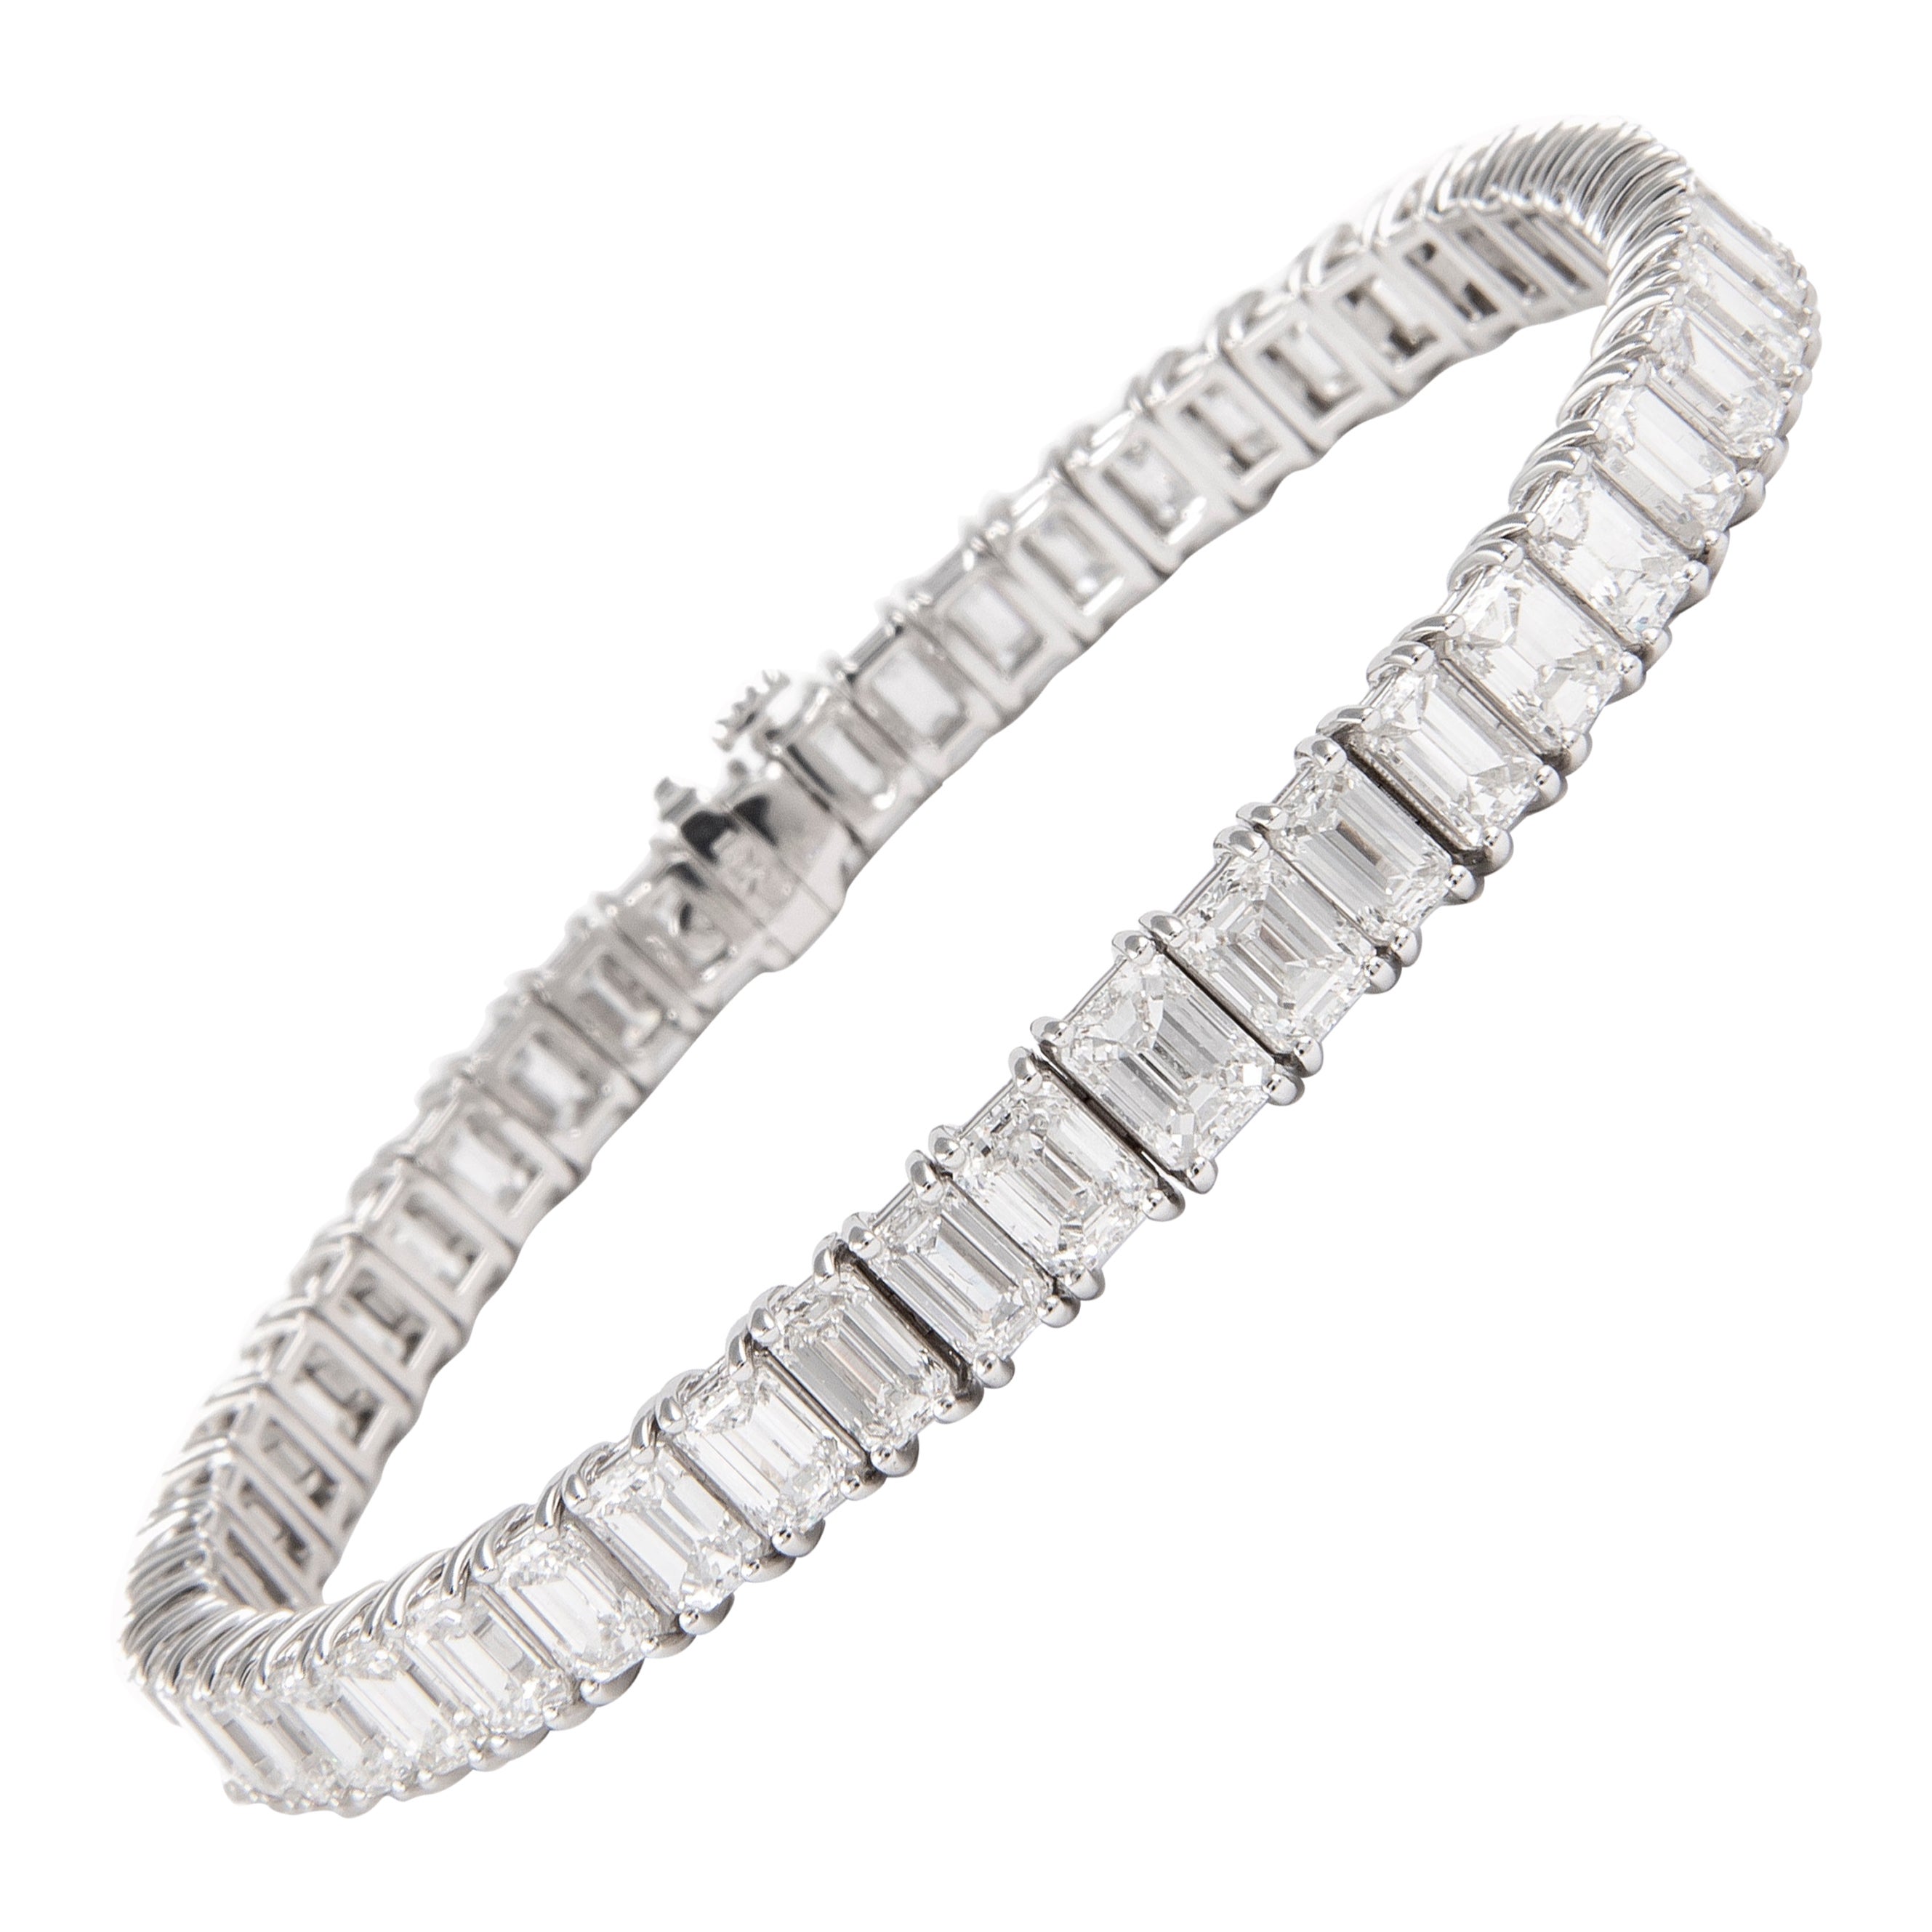 Alexander 17.15 Carat Emerald Cut Diamond Tennis Bracelet 18-Karat White Gold